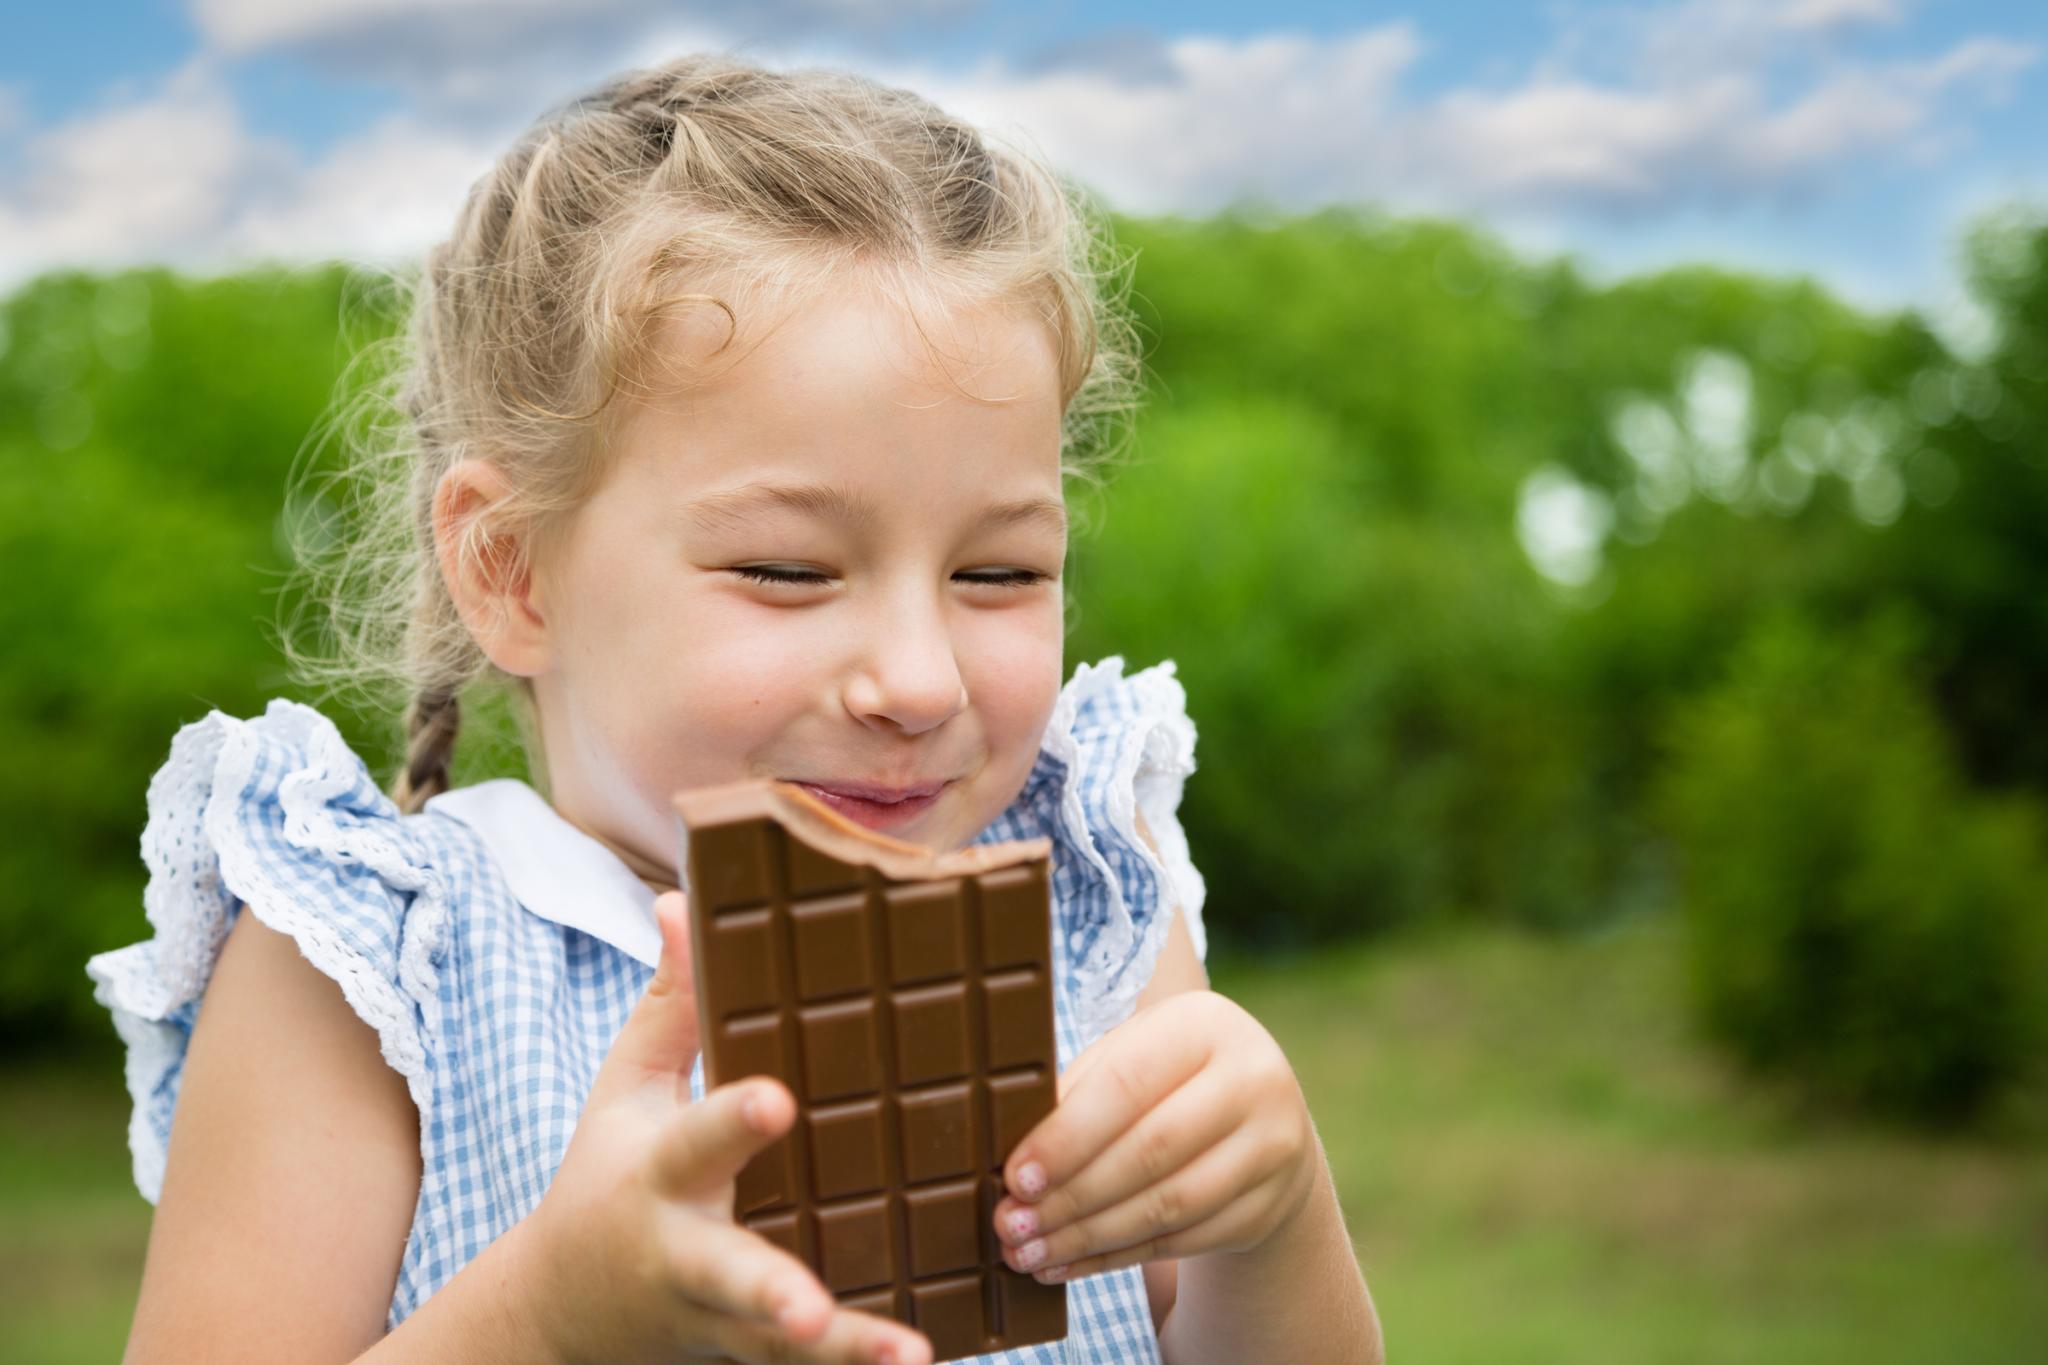 girl eating a chocolate bar with joy